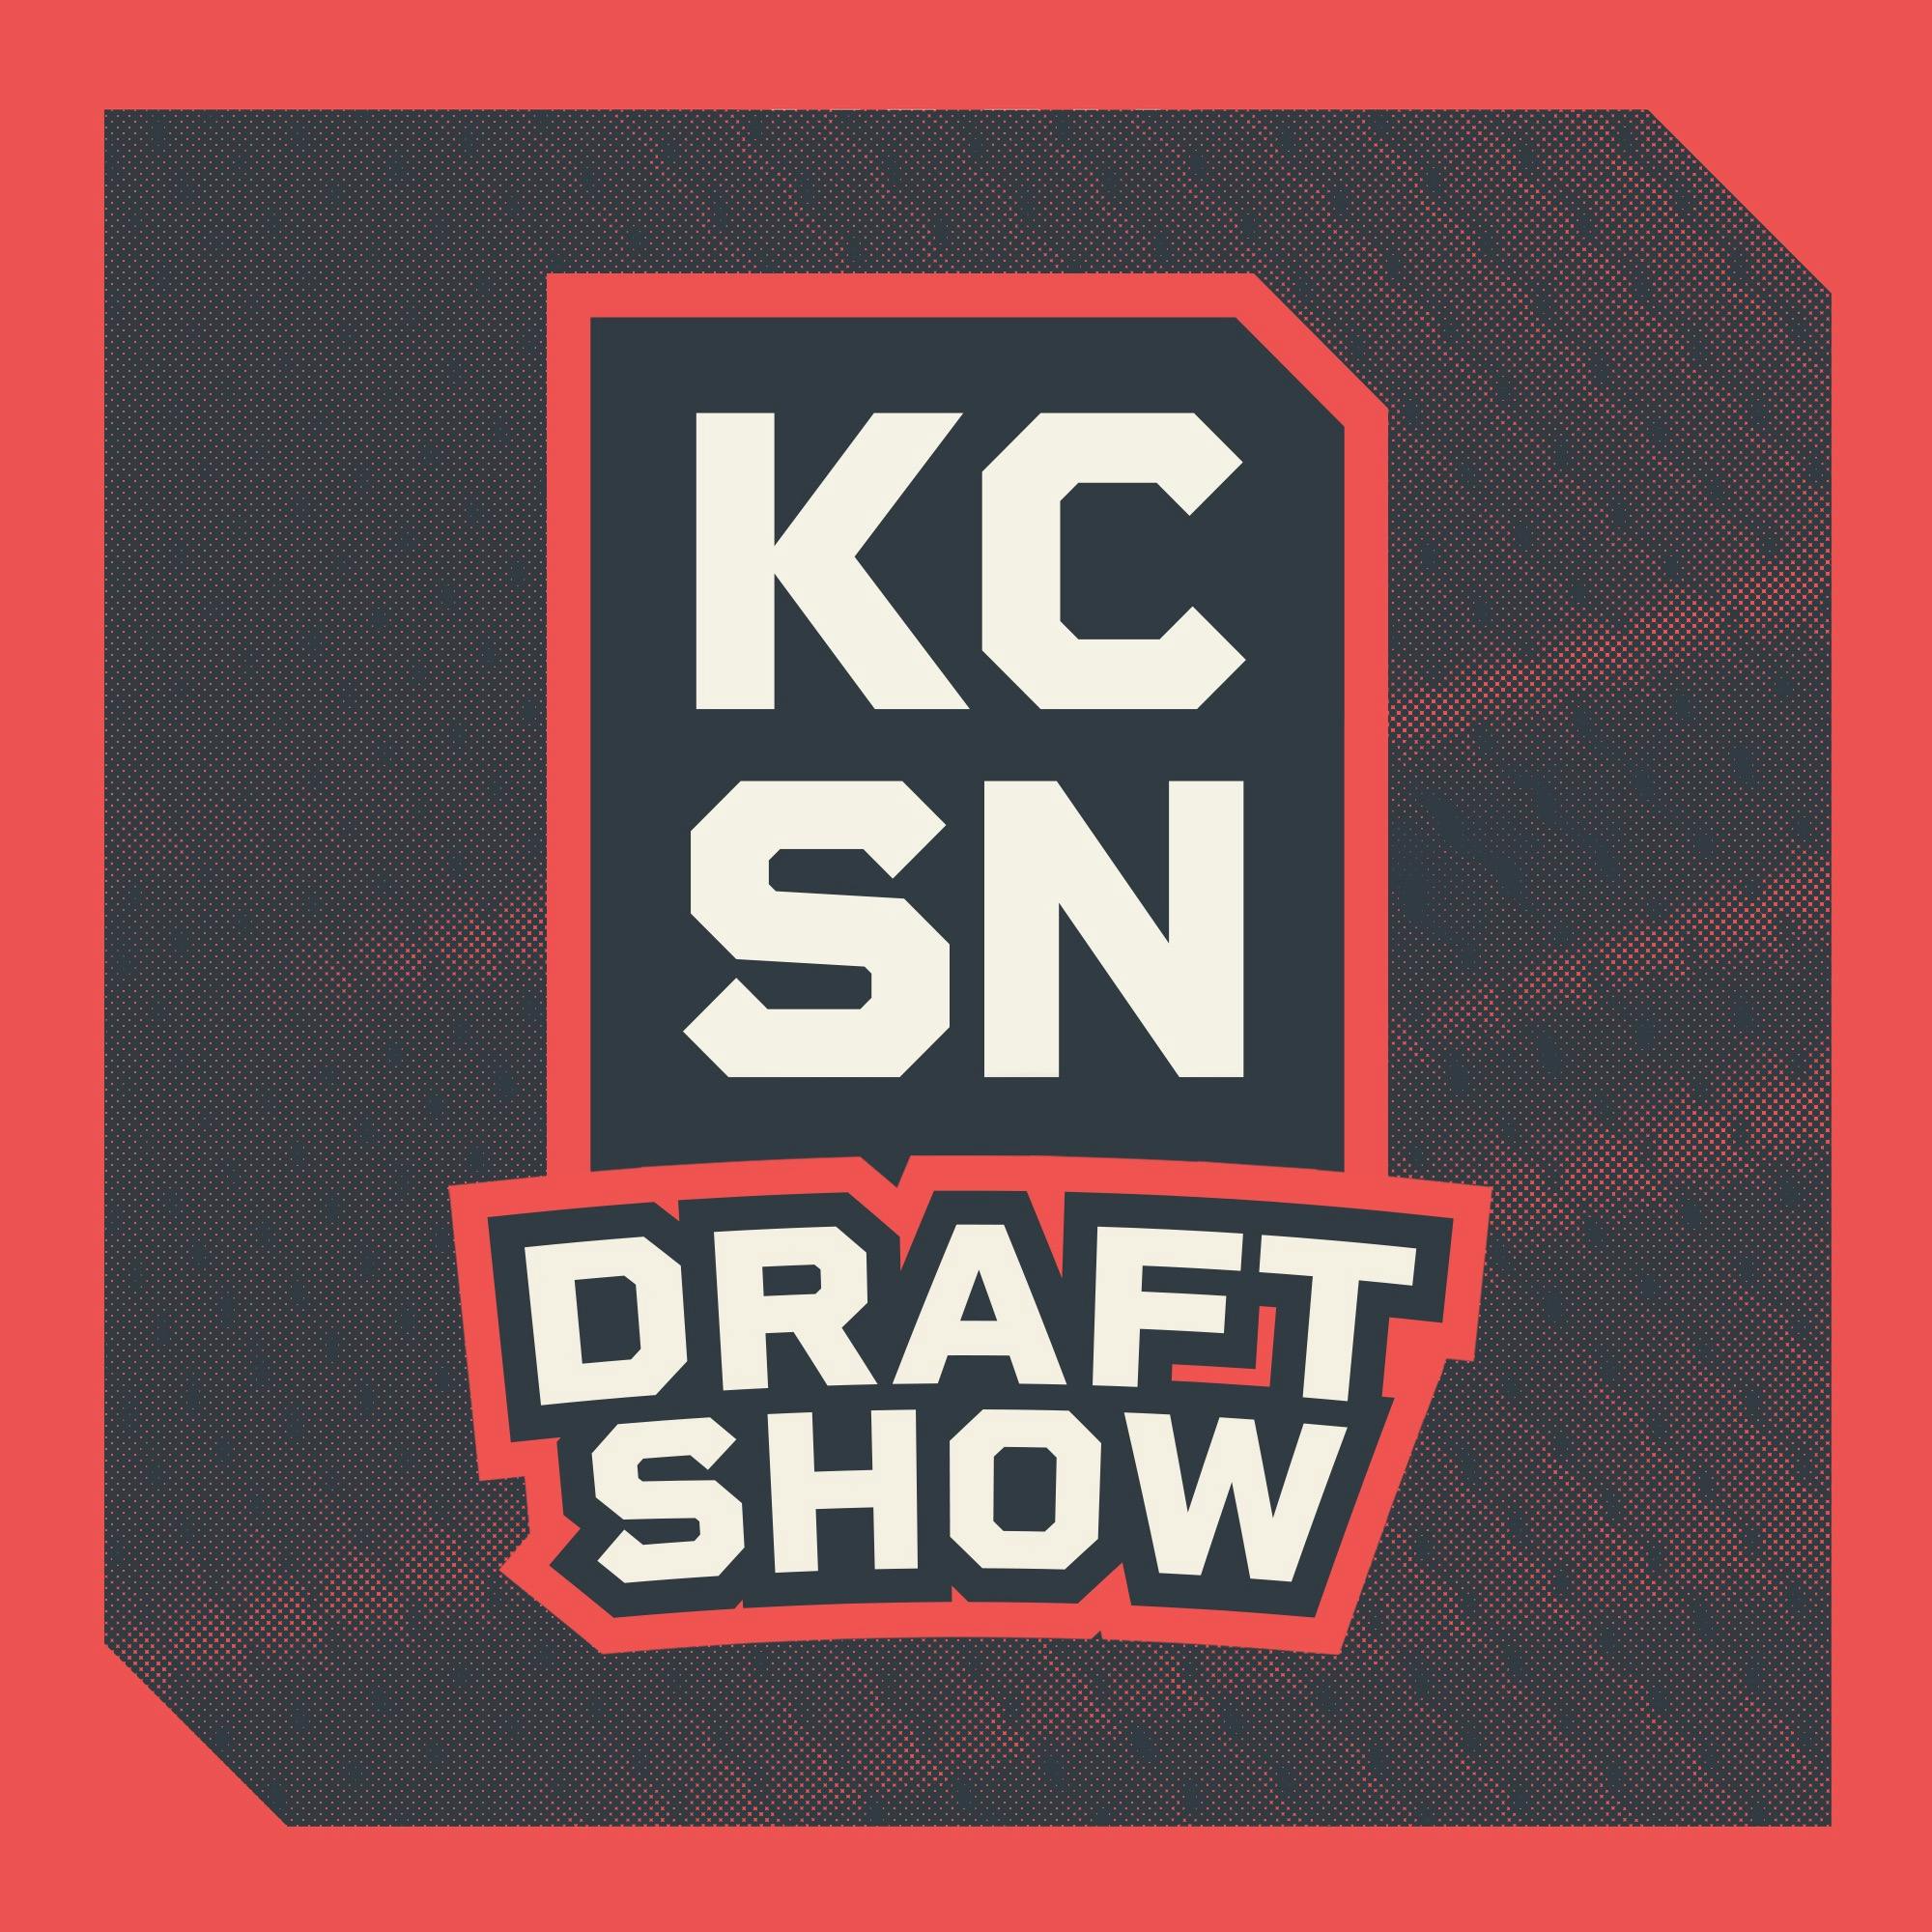 KCSN Draft Show 3/1: PFF's Brad Spielberger and Sam Monson Join Hayley Lewis to Break Down Chiefs Offseason